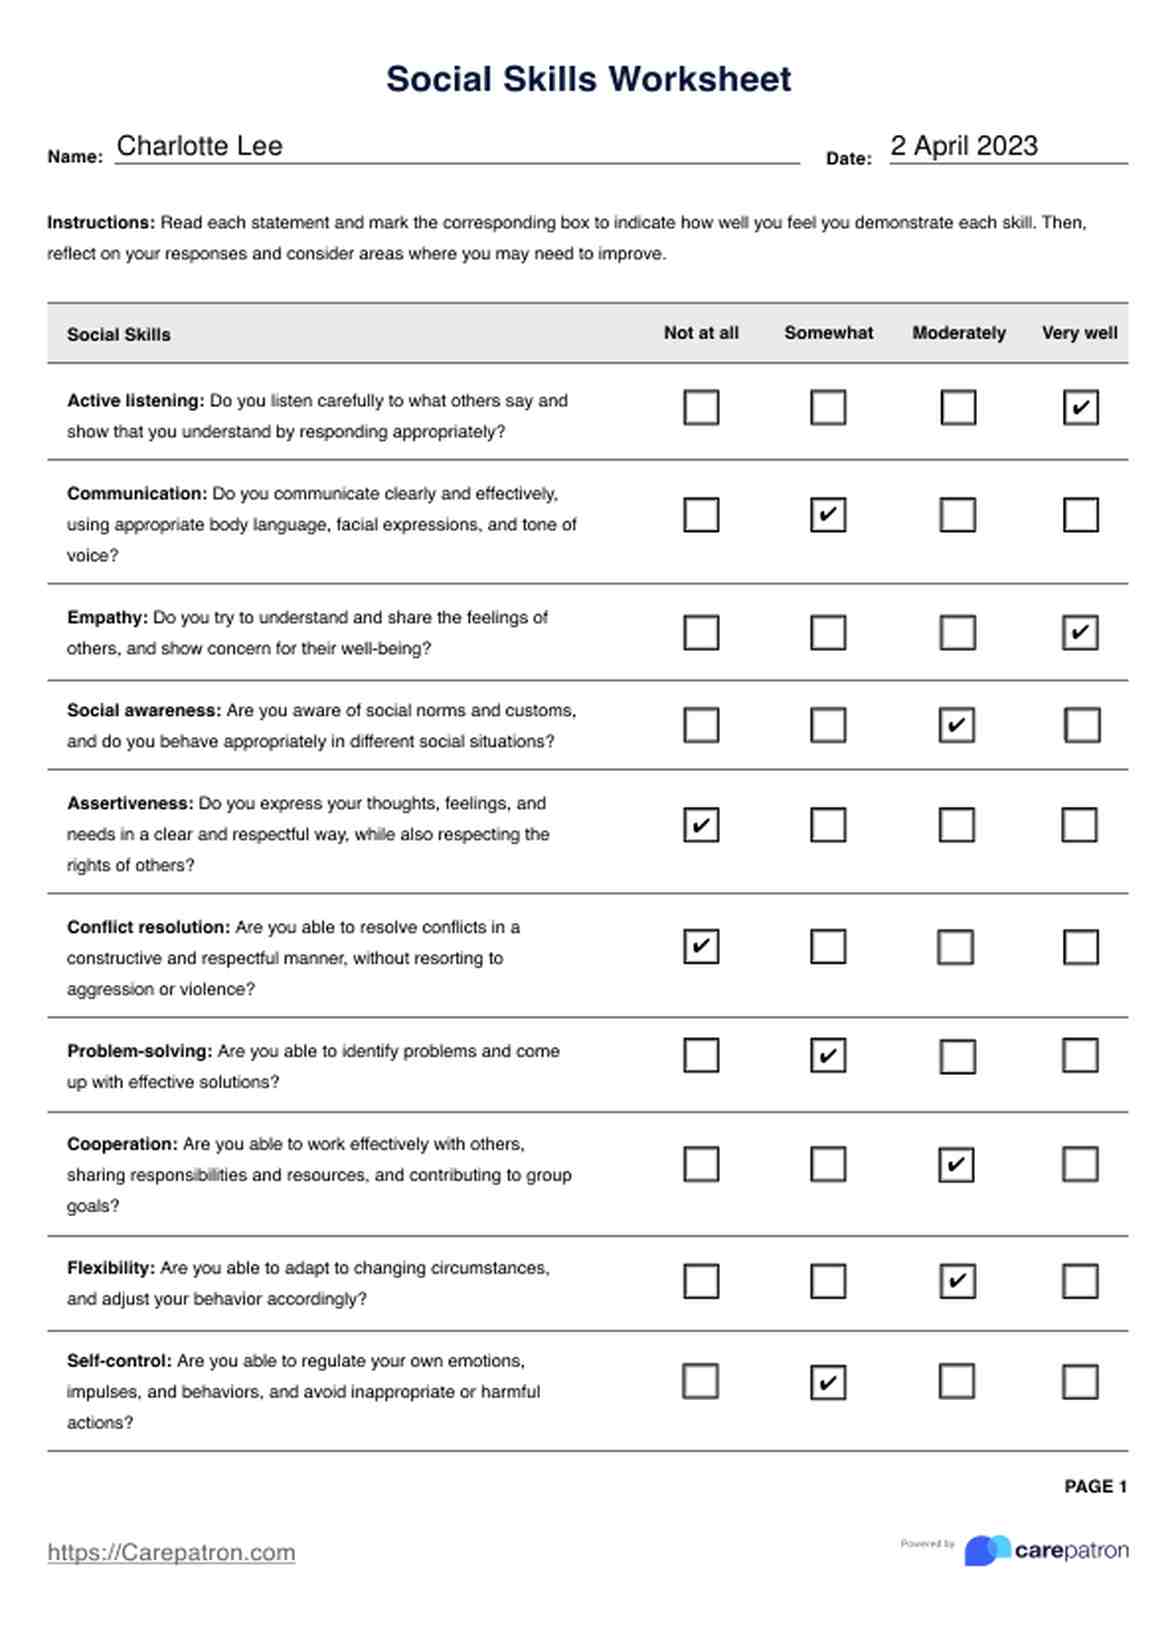 Social Skills Worksheet PDF Example